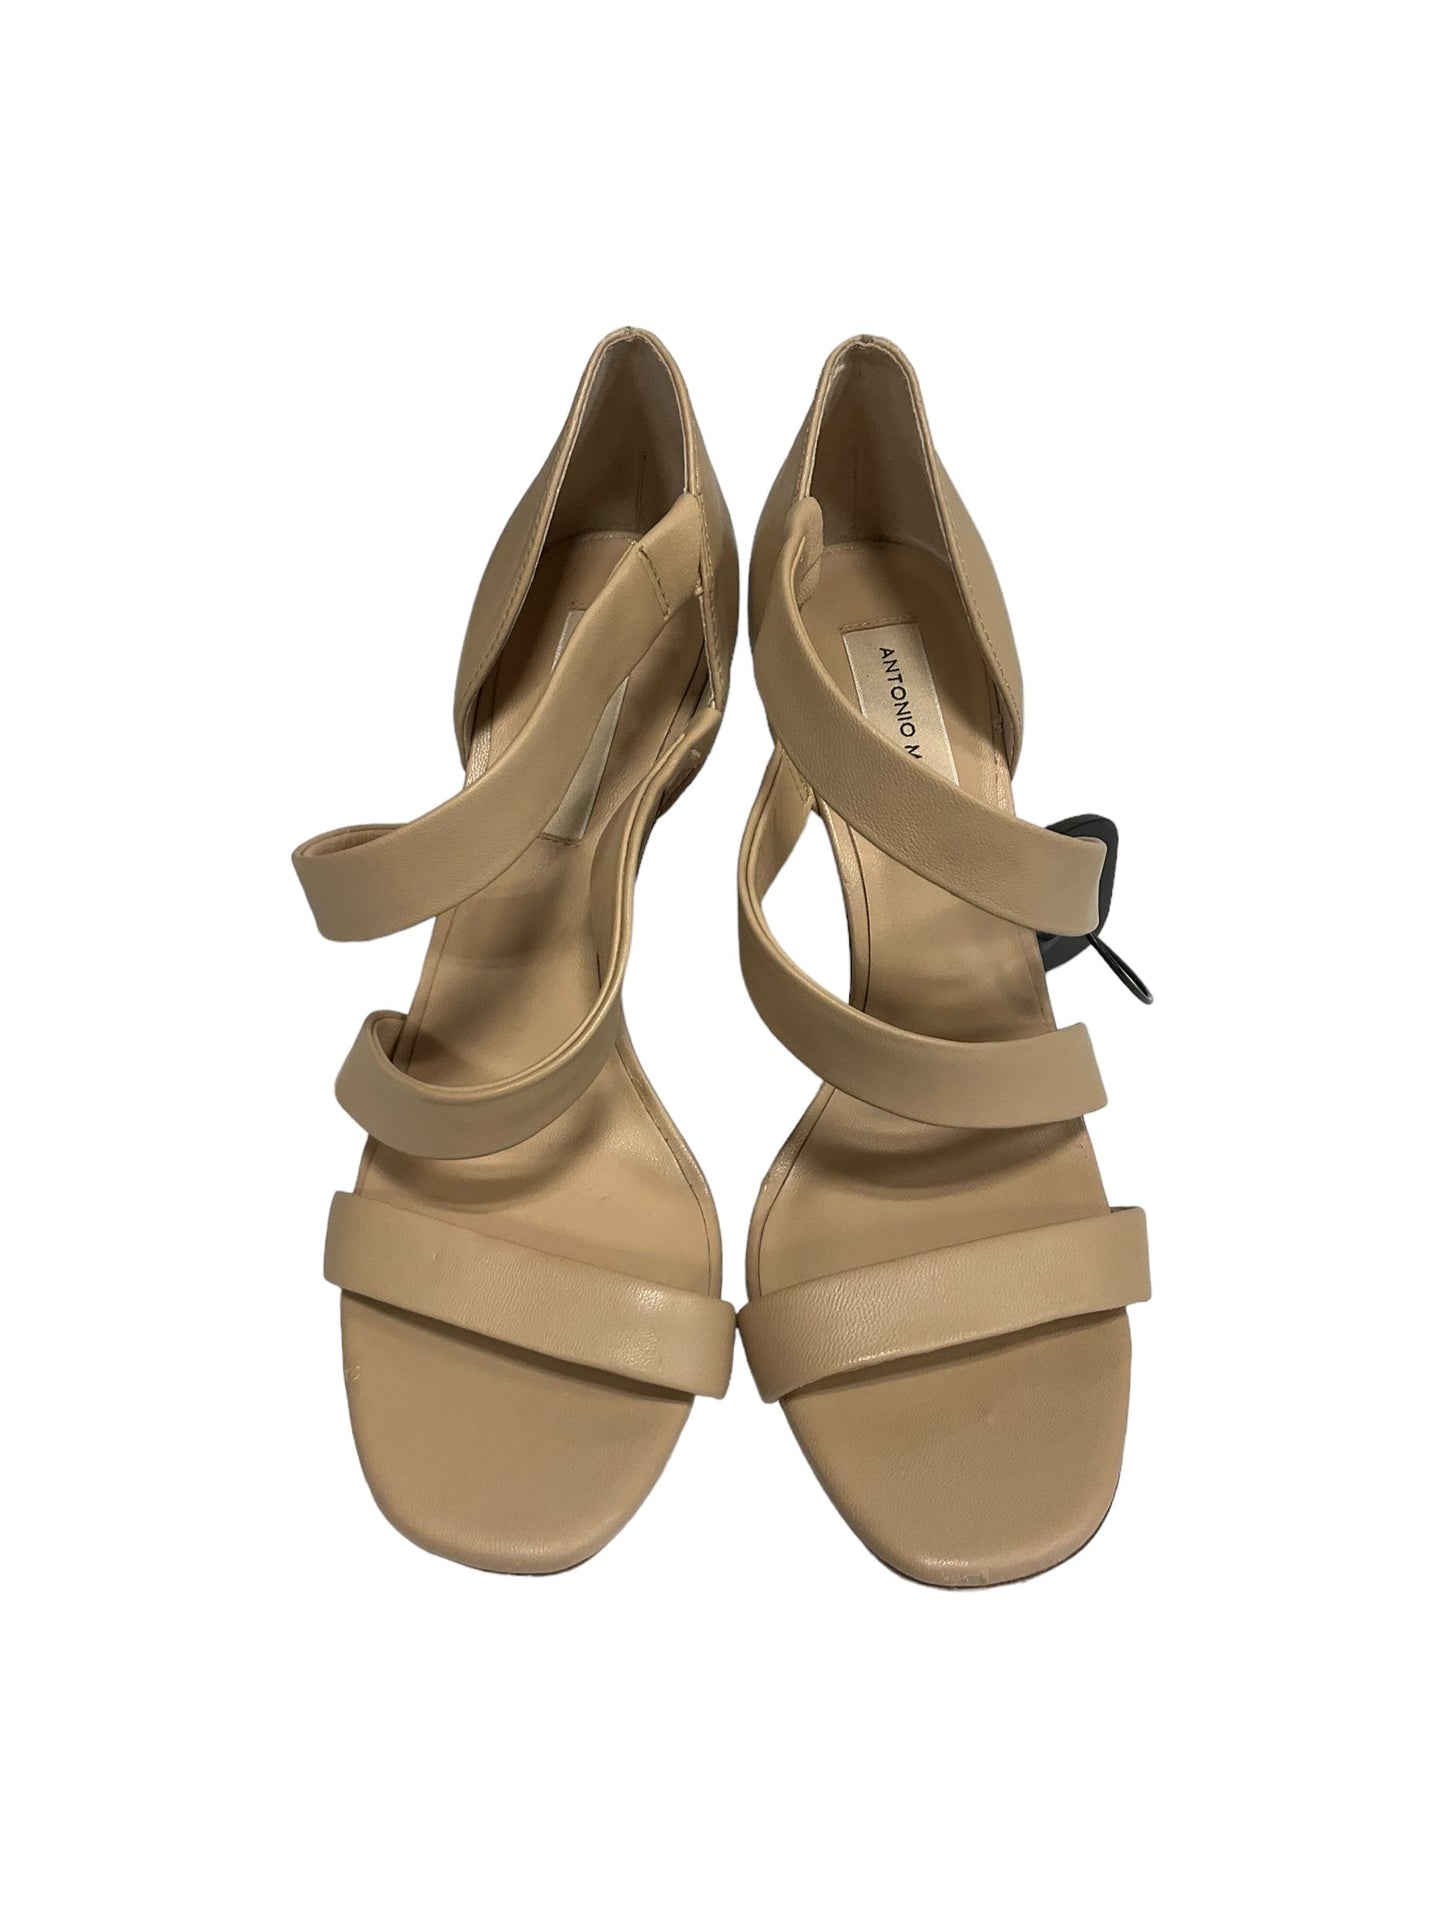 Tan Shoes Heels Stiletto Antonio Melani, Size 8.5